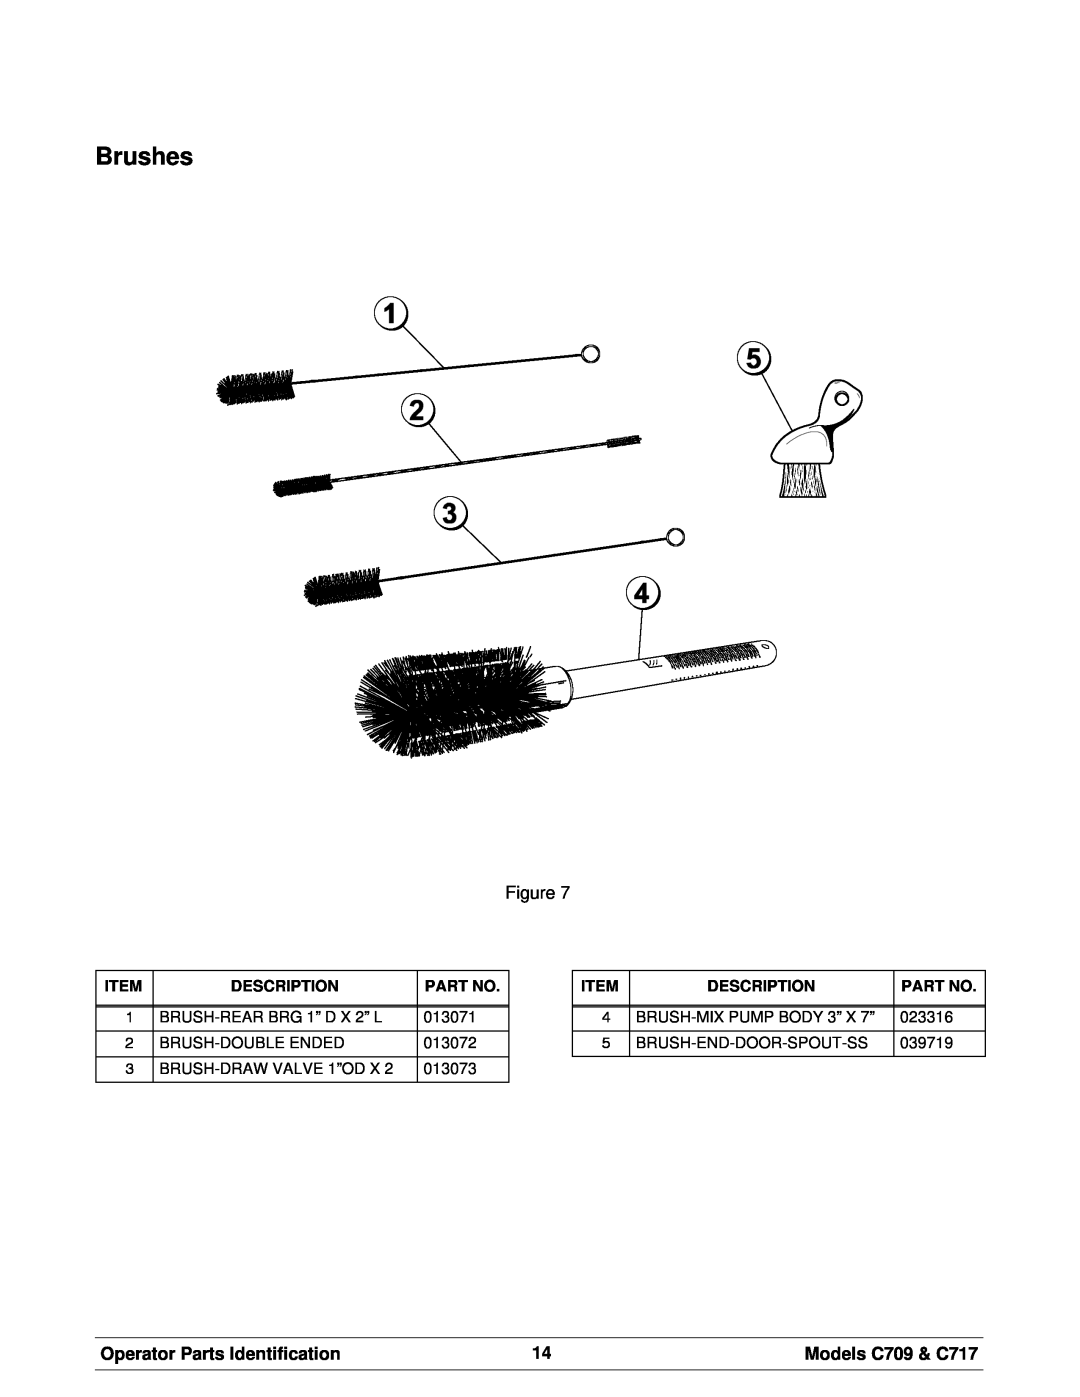 Taylor manual Brushes, Operator Parts Identification, Models C709 & C717, Description 